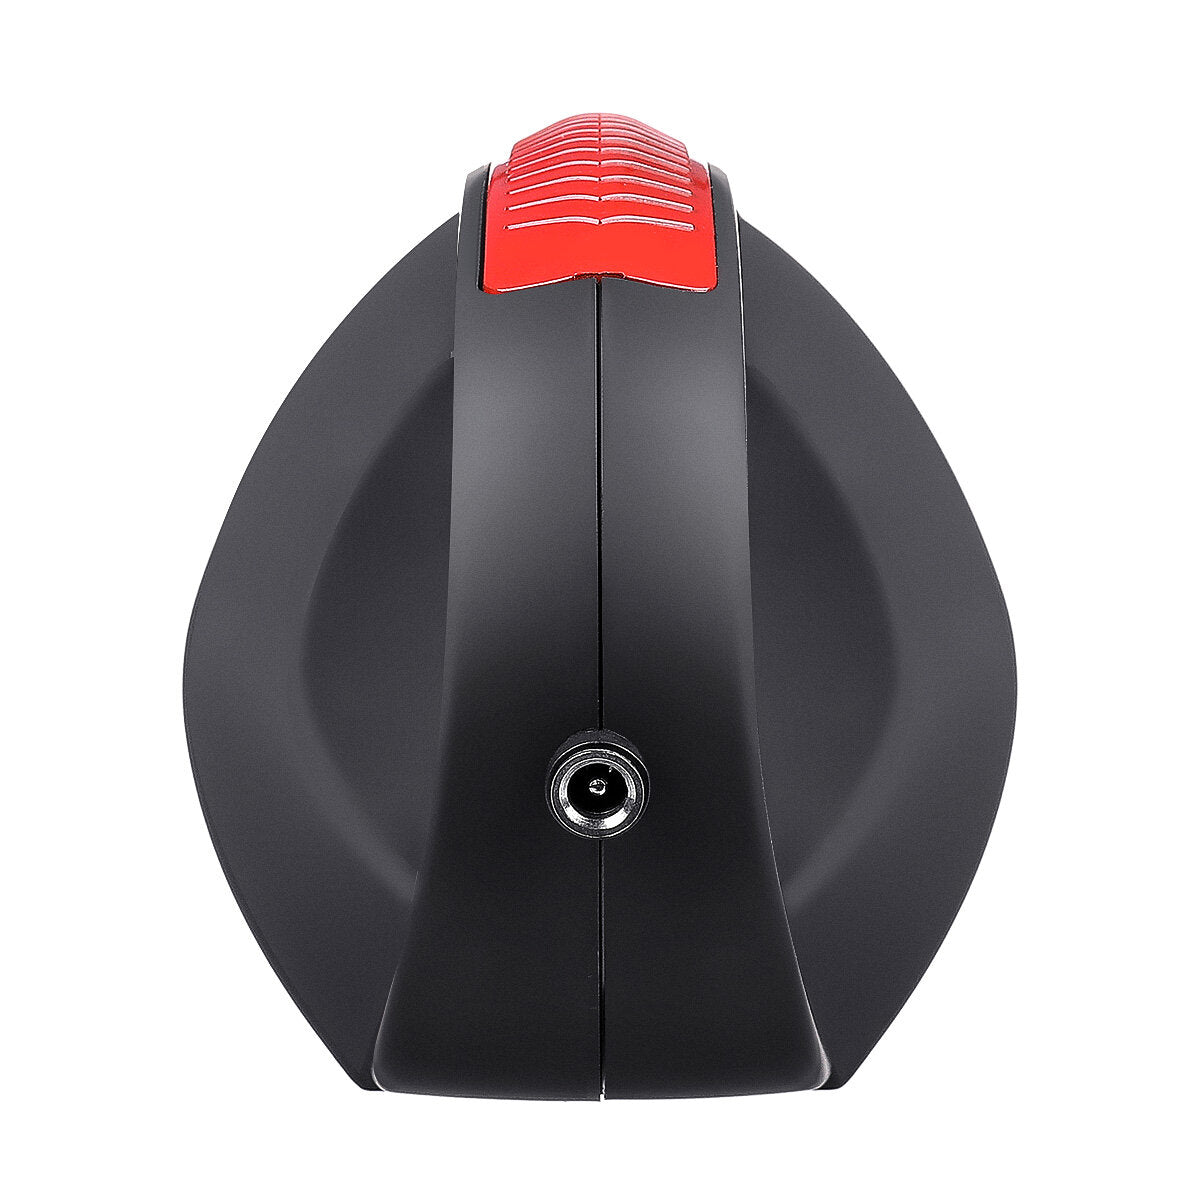 Car Vacuum Cleaner Mini Cordless Rechargeable Handheld 120w